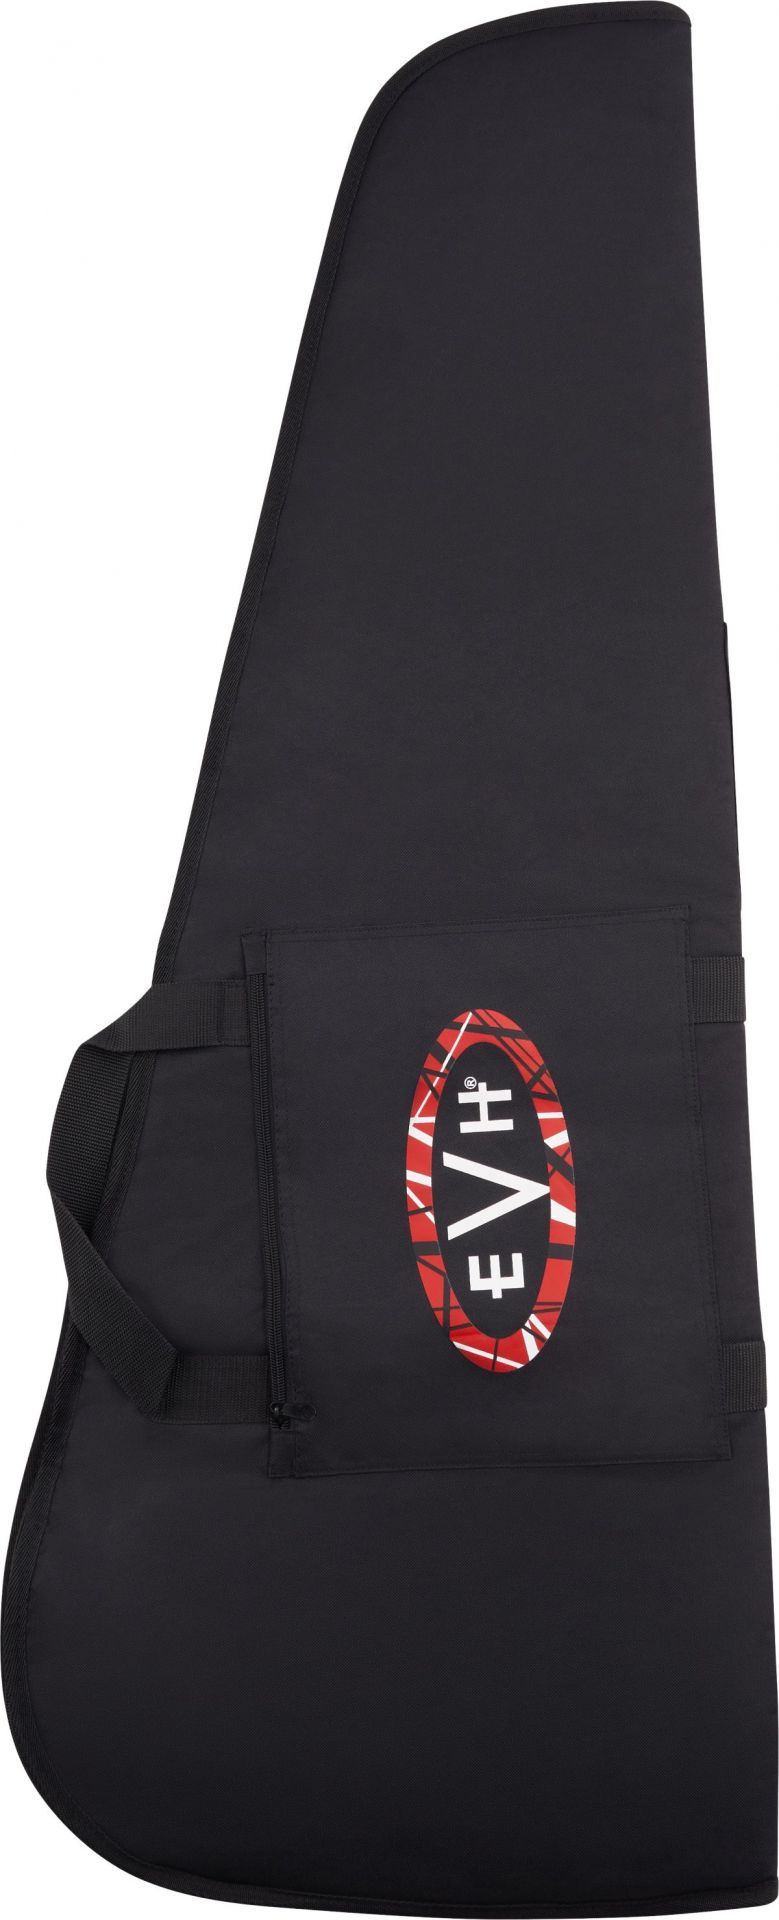 EVH Wolfgang/Striped Series Economy Gig Bag Black